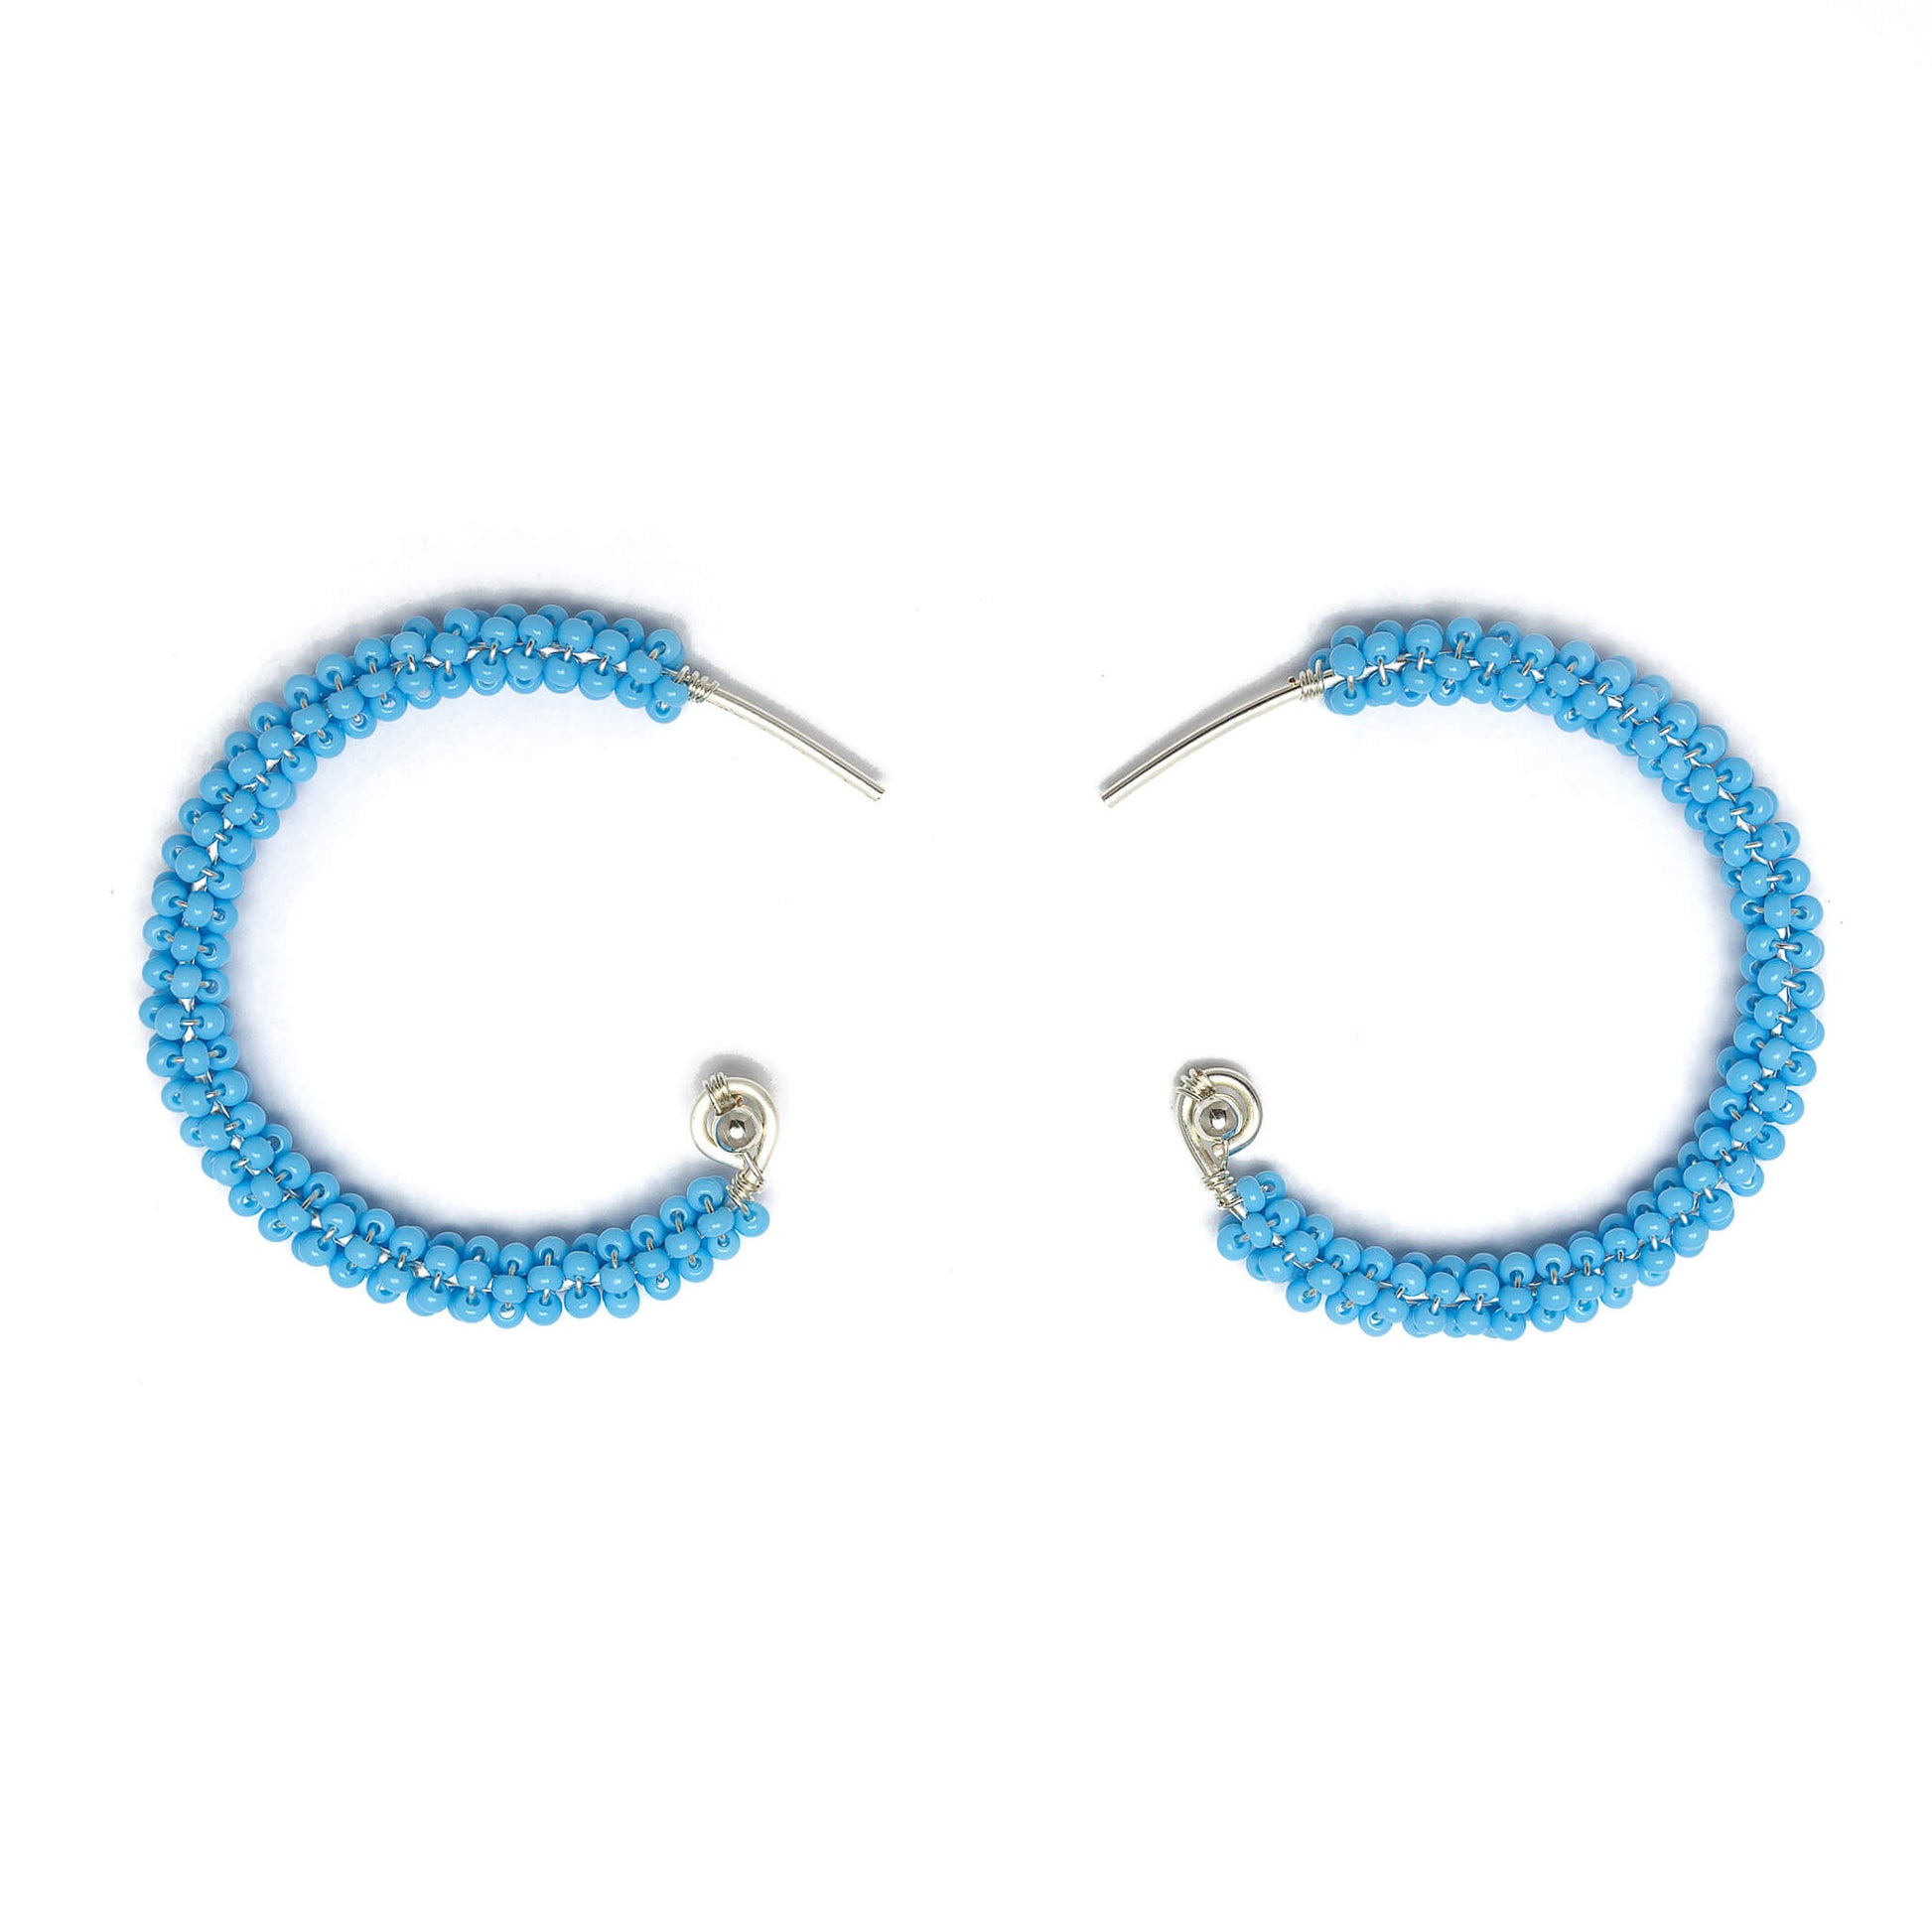 Florence Silver Hoop Earrings are 1.5 inches long, Silver and Blue Earrings. Wire Wrapped Earrings. Lightweight and comfortable earrings. Handmade for women. Open hoop earrings